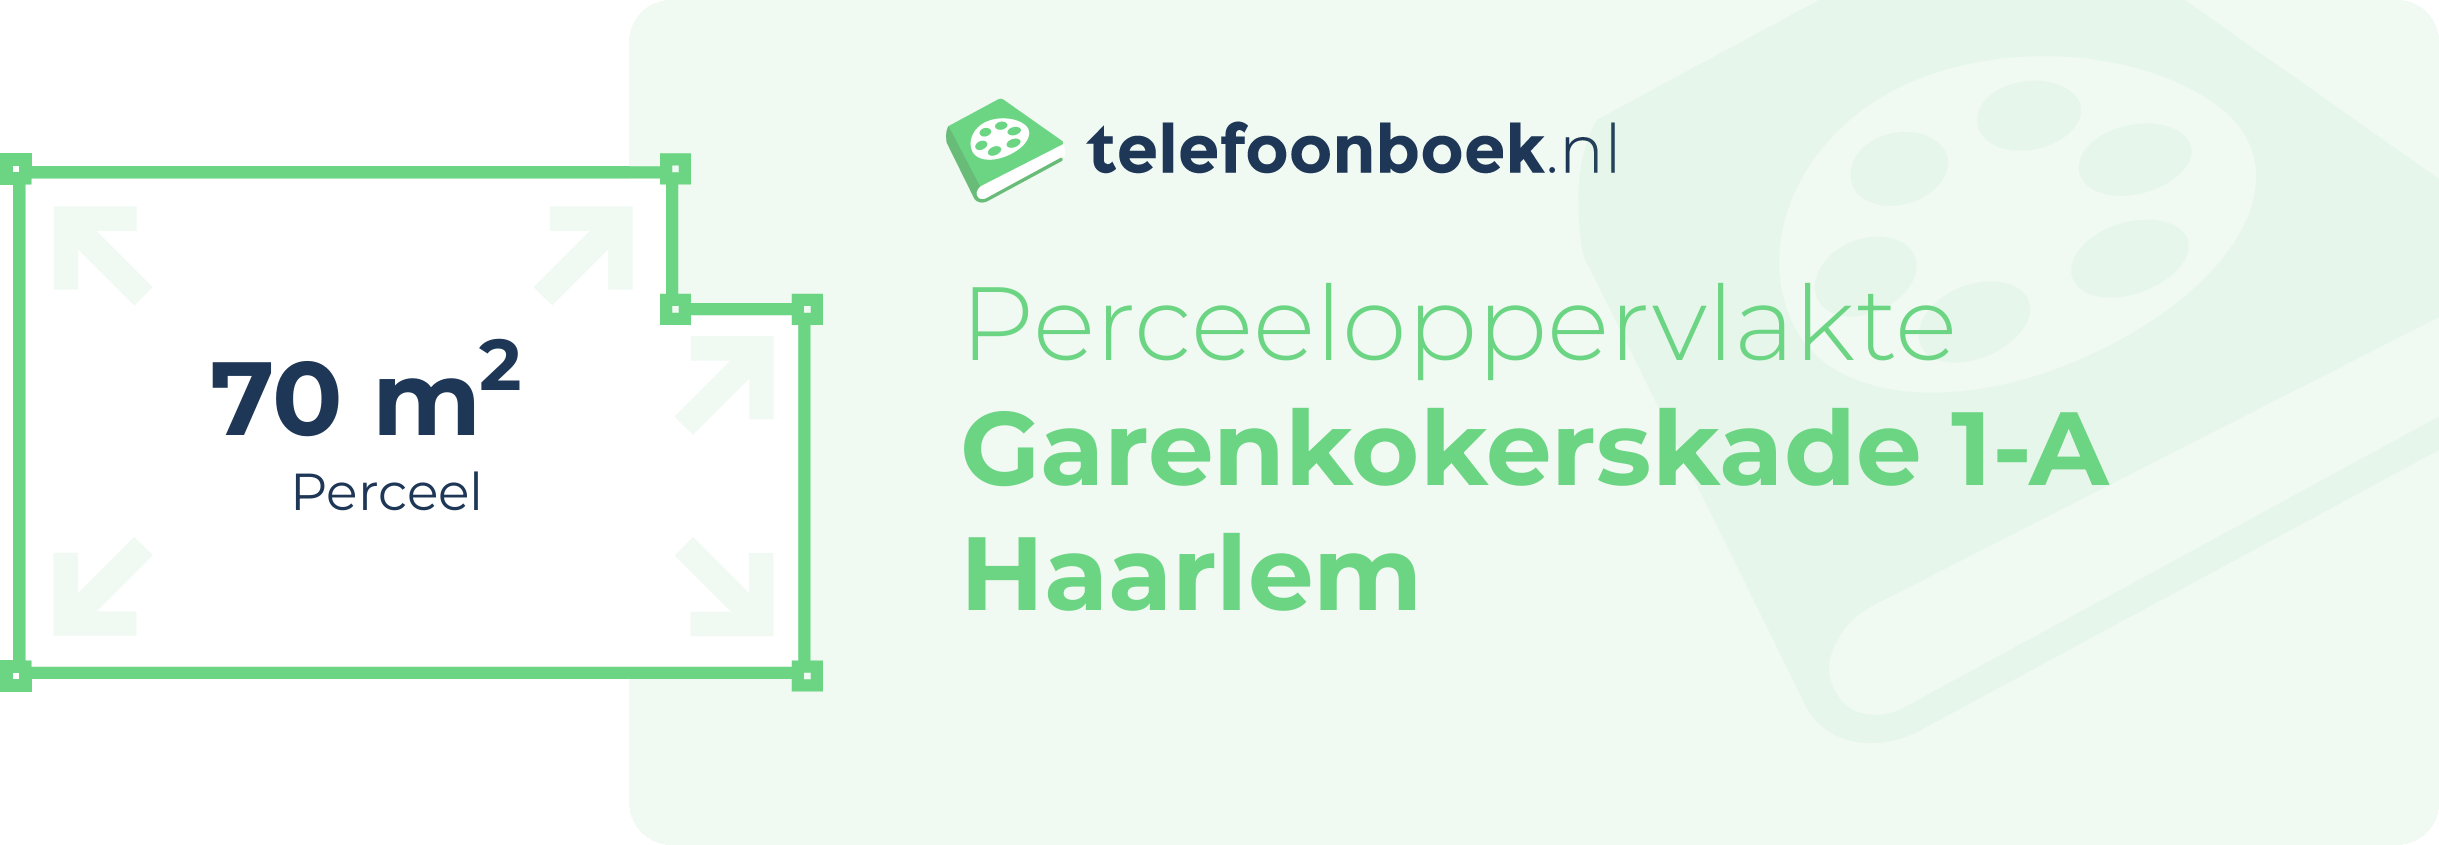 Perceeloppervlakte Garenkokerskade 1-A Haarlem